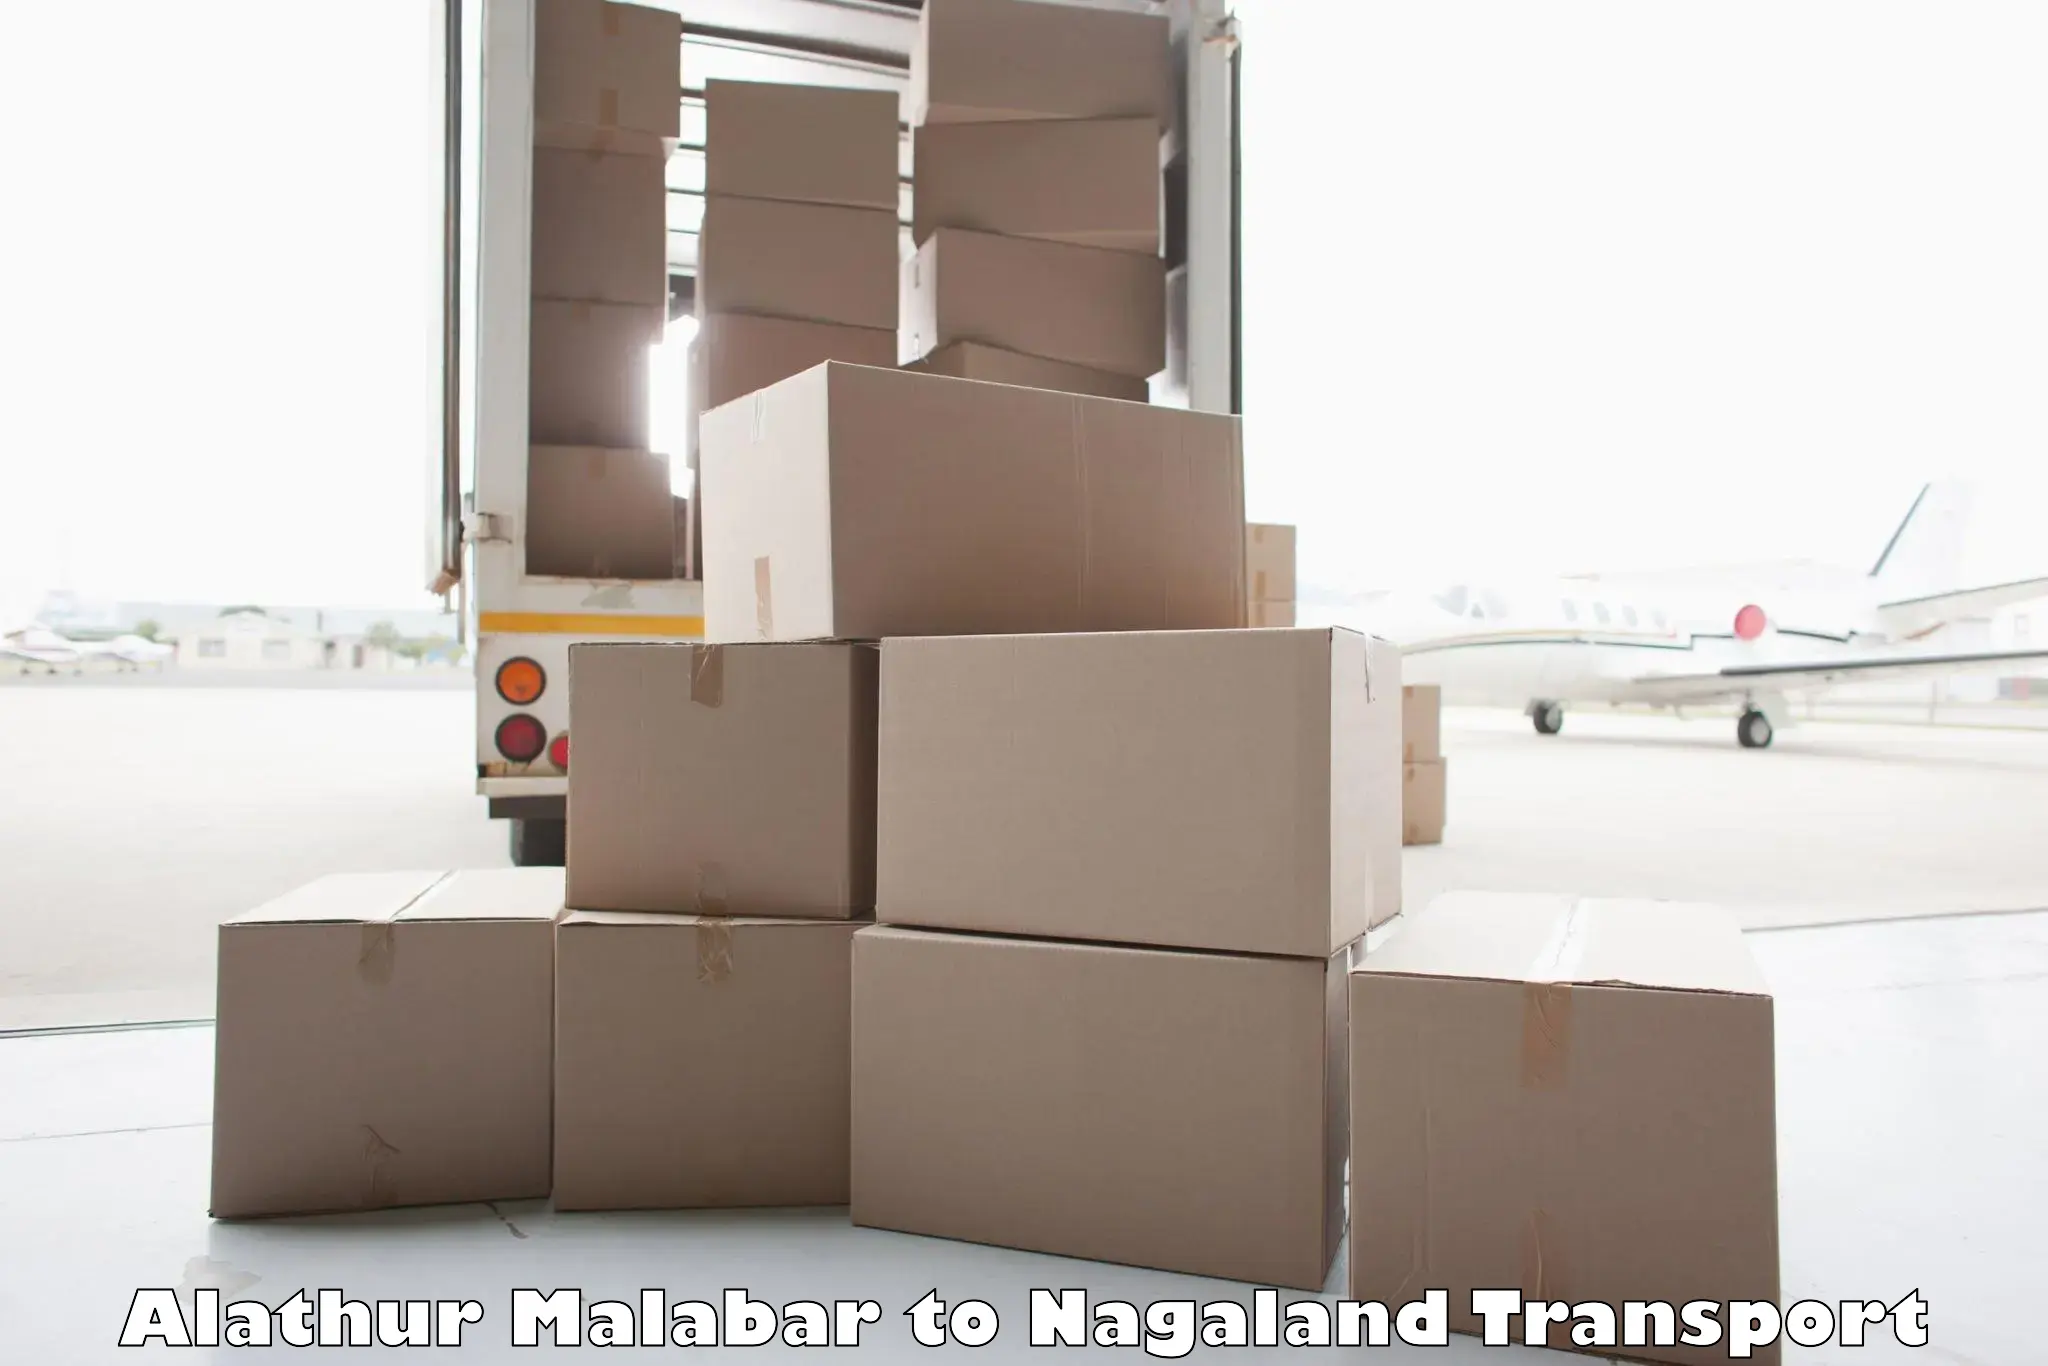 Commercial transport service Alathur Malabar to Nagaland